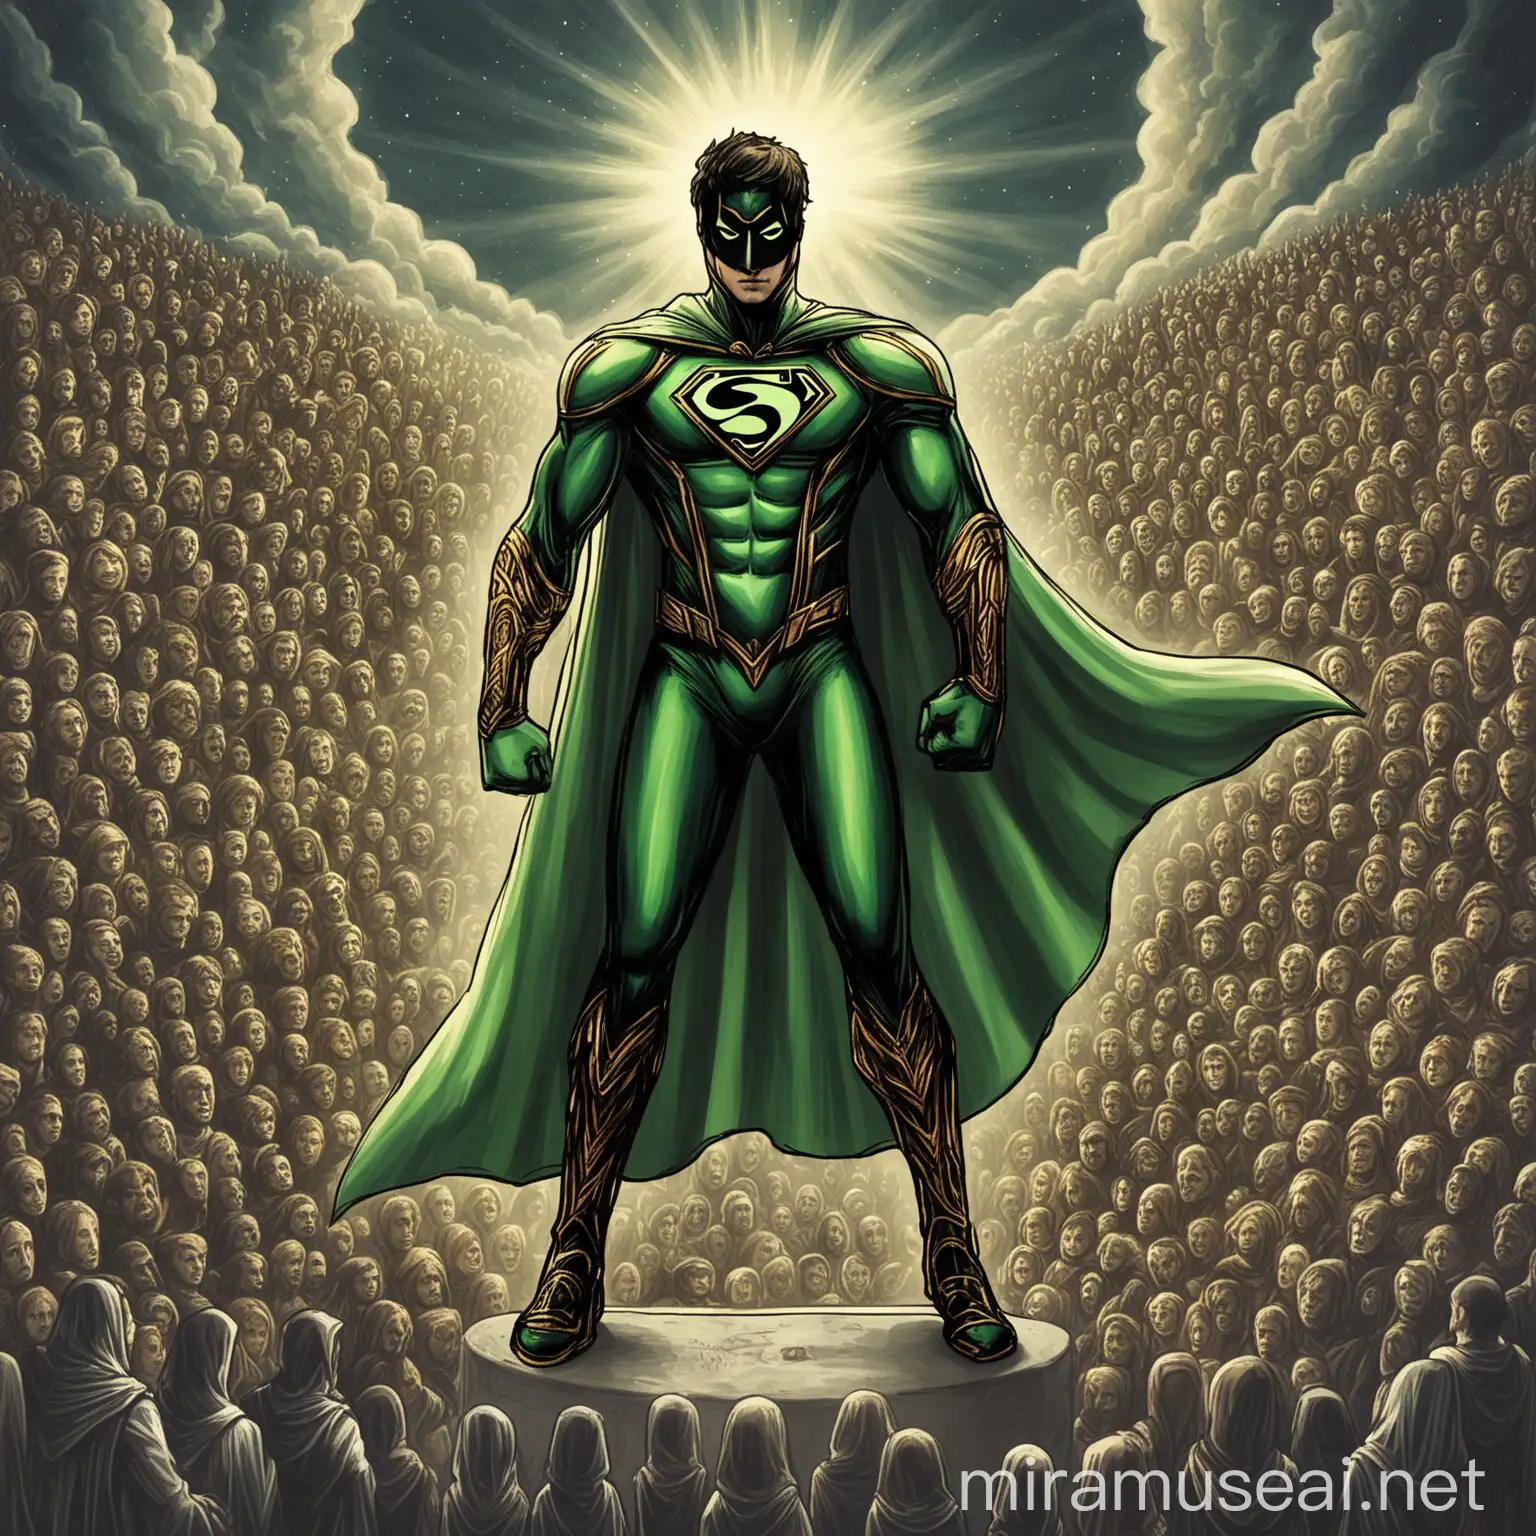 Dream Guardian Superhero Serpenteo Confronting Fears in Safe Dreamscapes